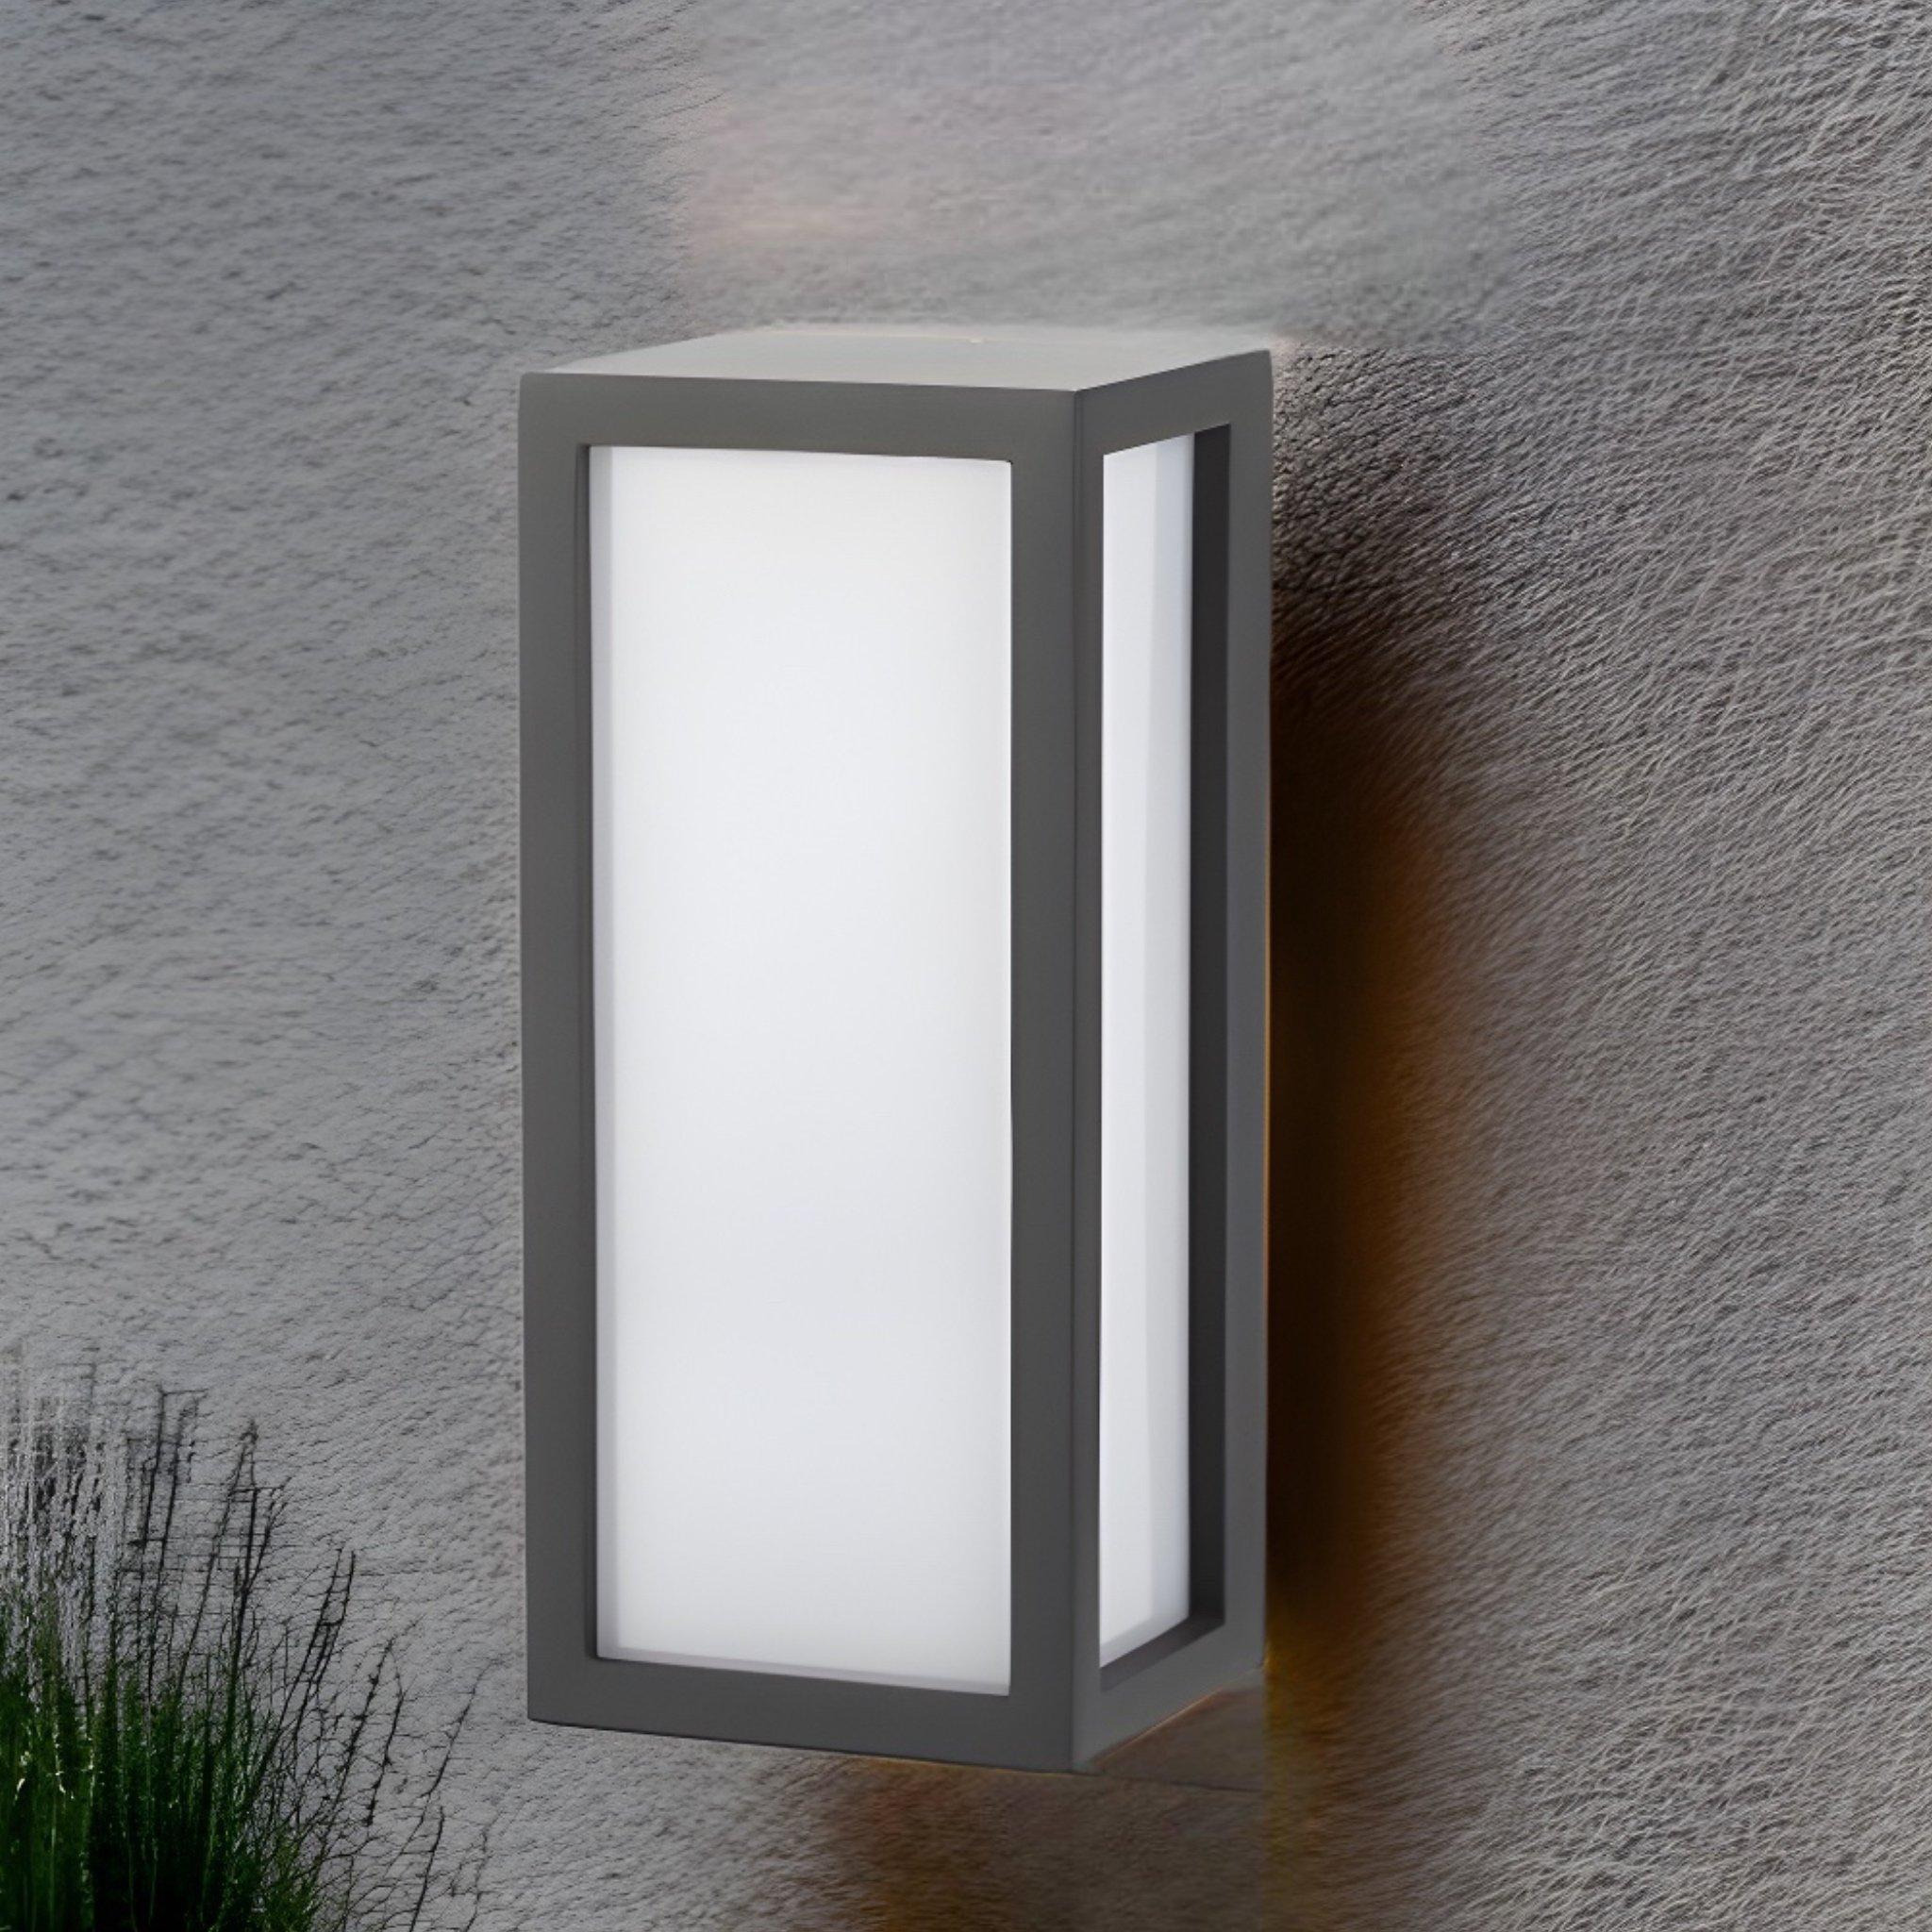 CGC Lighting 'Kinsley' Black E27 Outdoor Wall Light Box Lantern Opal Diffuser IP54 - image 1